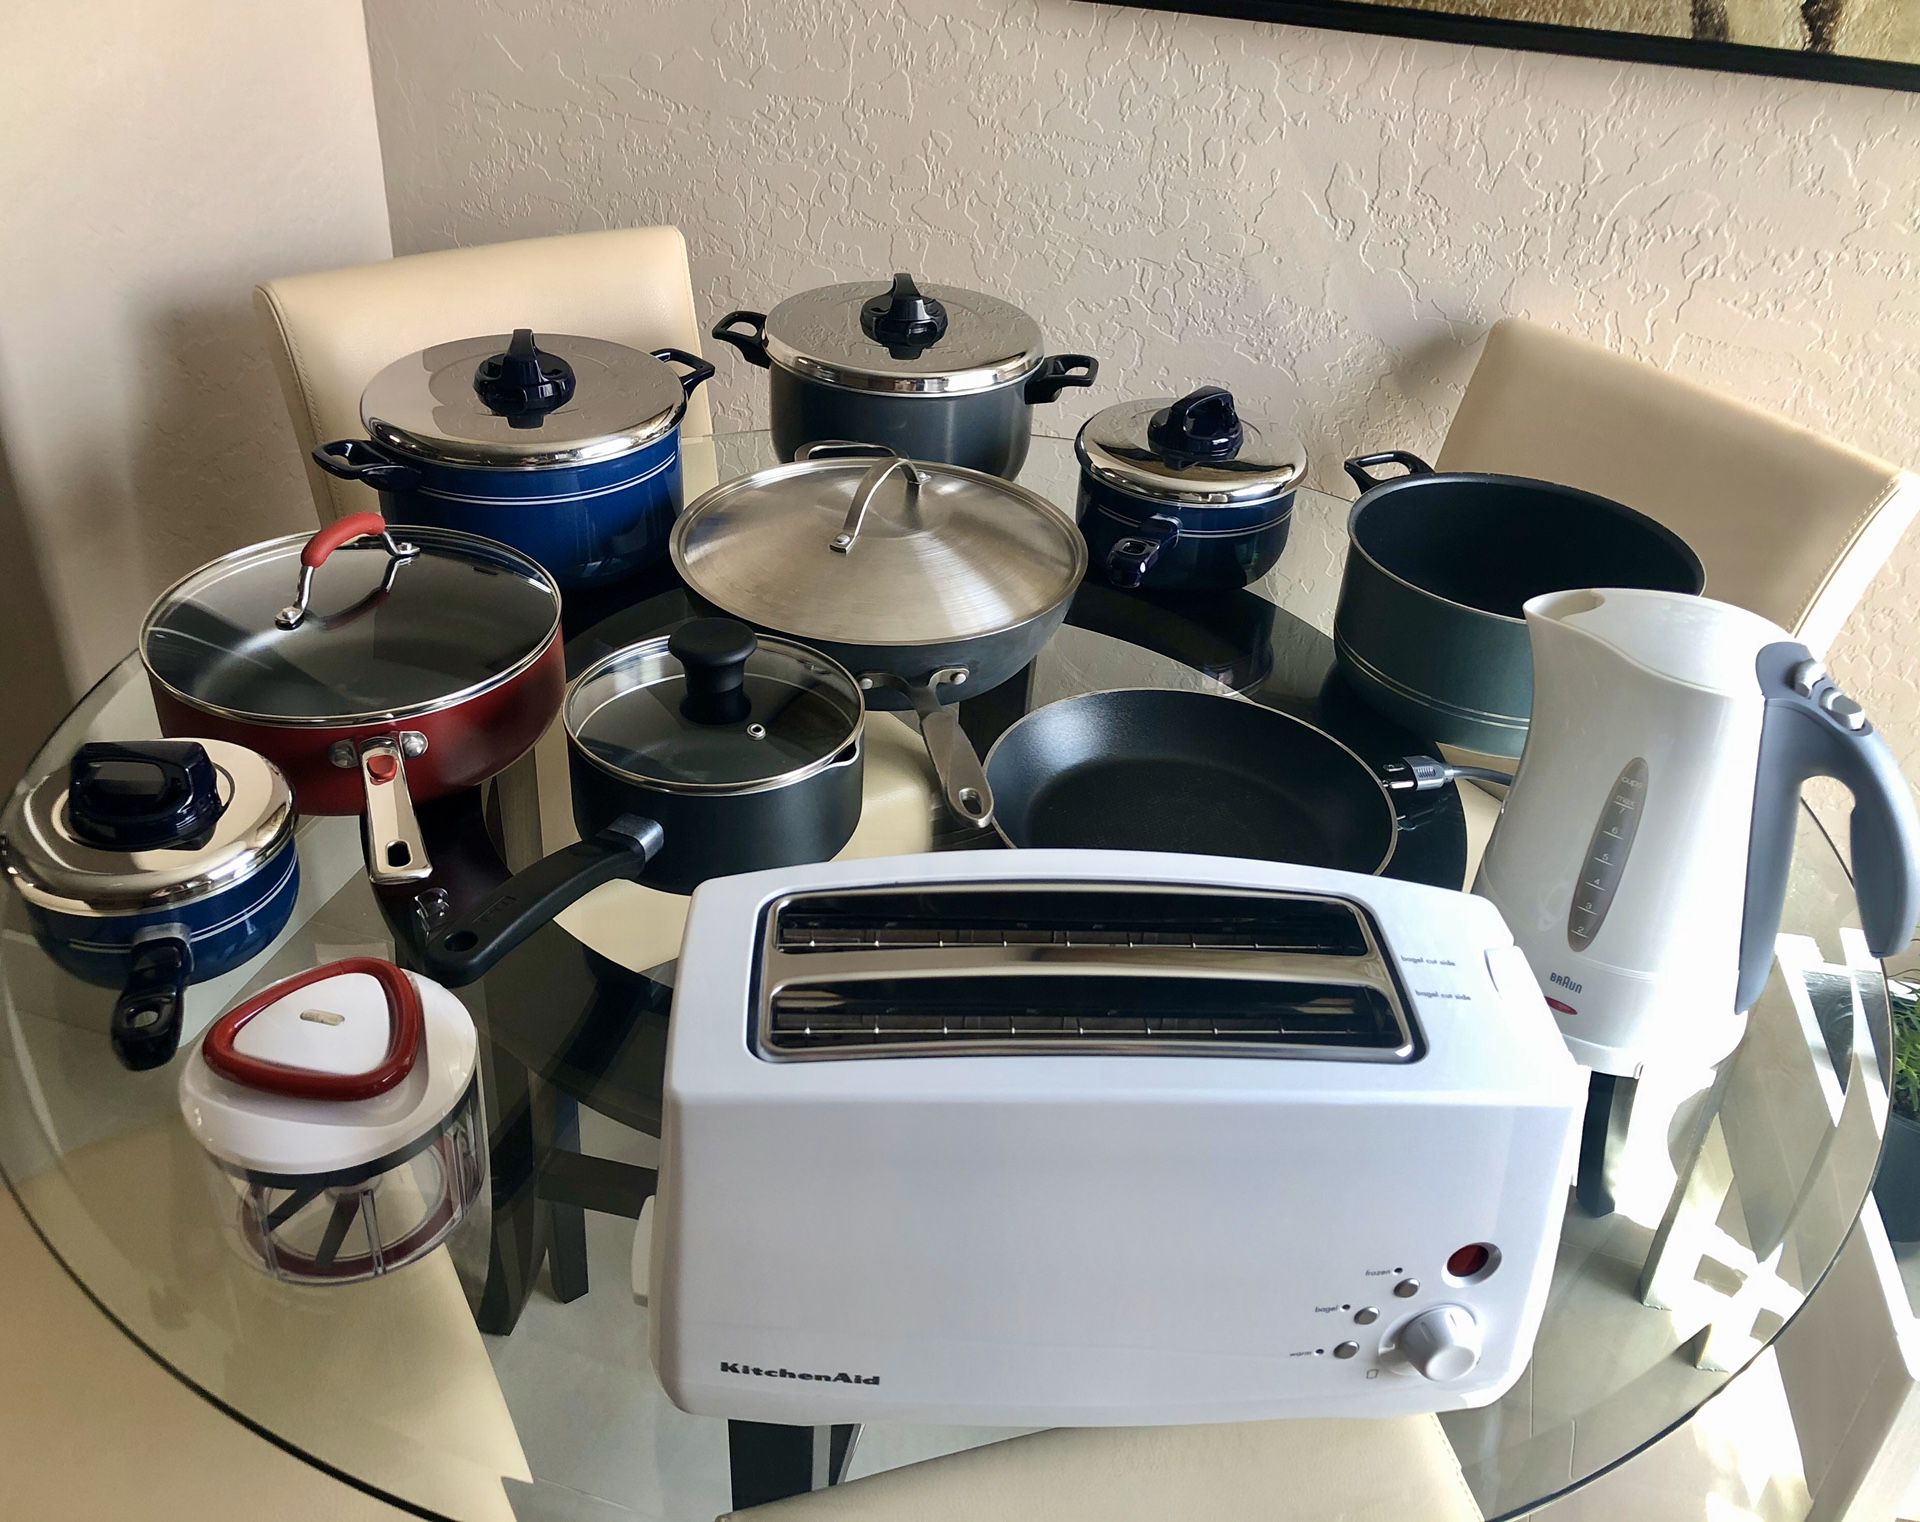 Miscellaneous pots, pans, toaster, kitchen stuff...